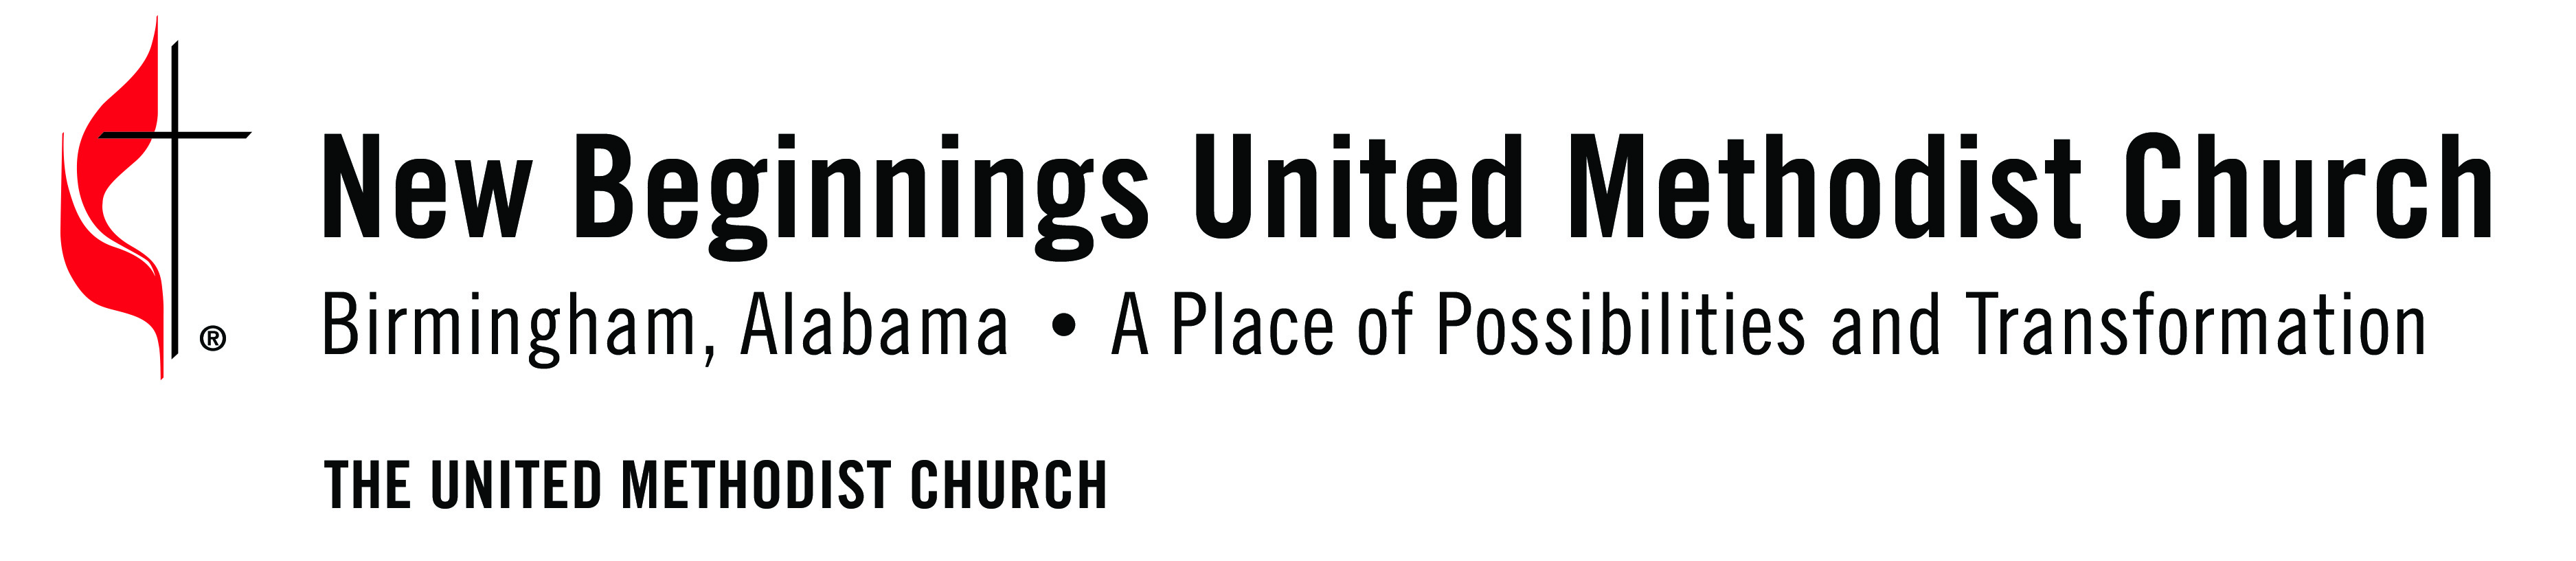 New Beginnings United Methodist Church